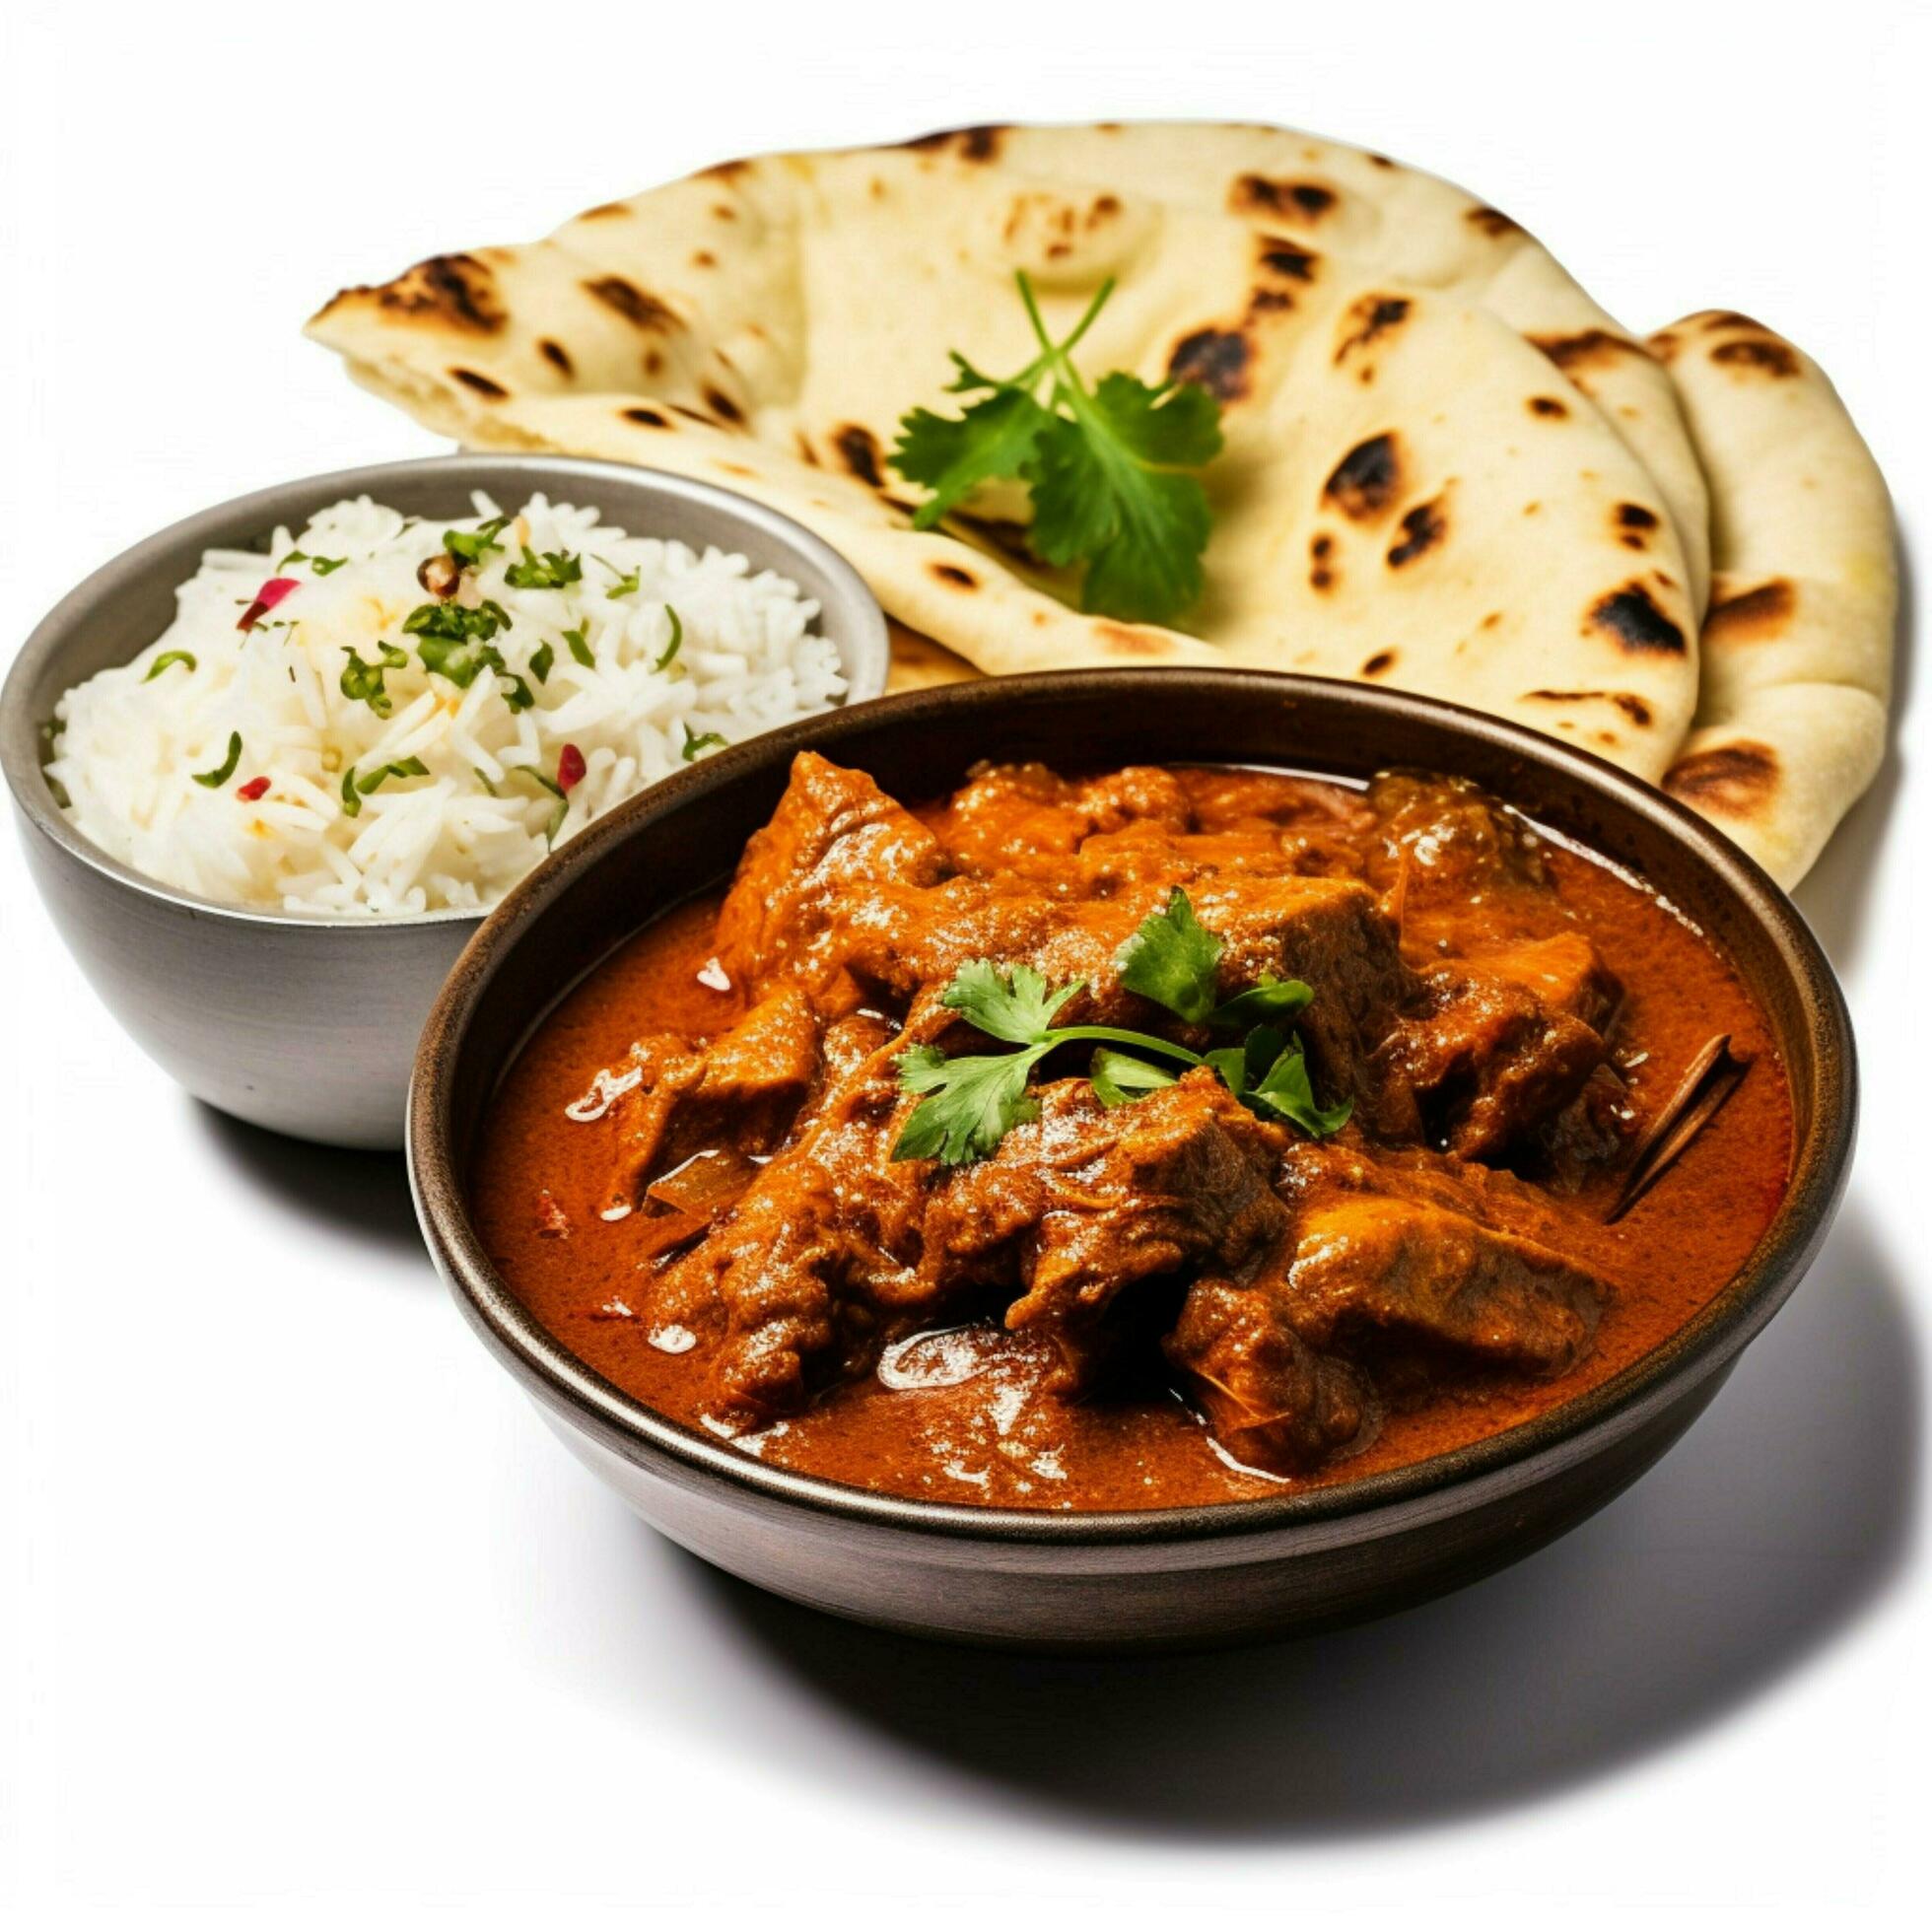 INDIAN FOOD Pork curry rogan josh with rice 30658762 Stock Photo at Vecteezy